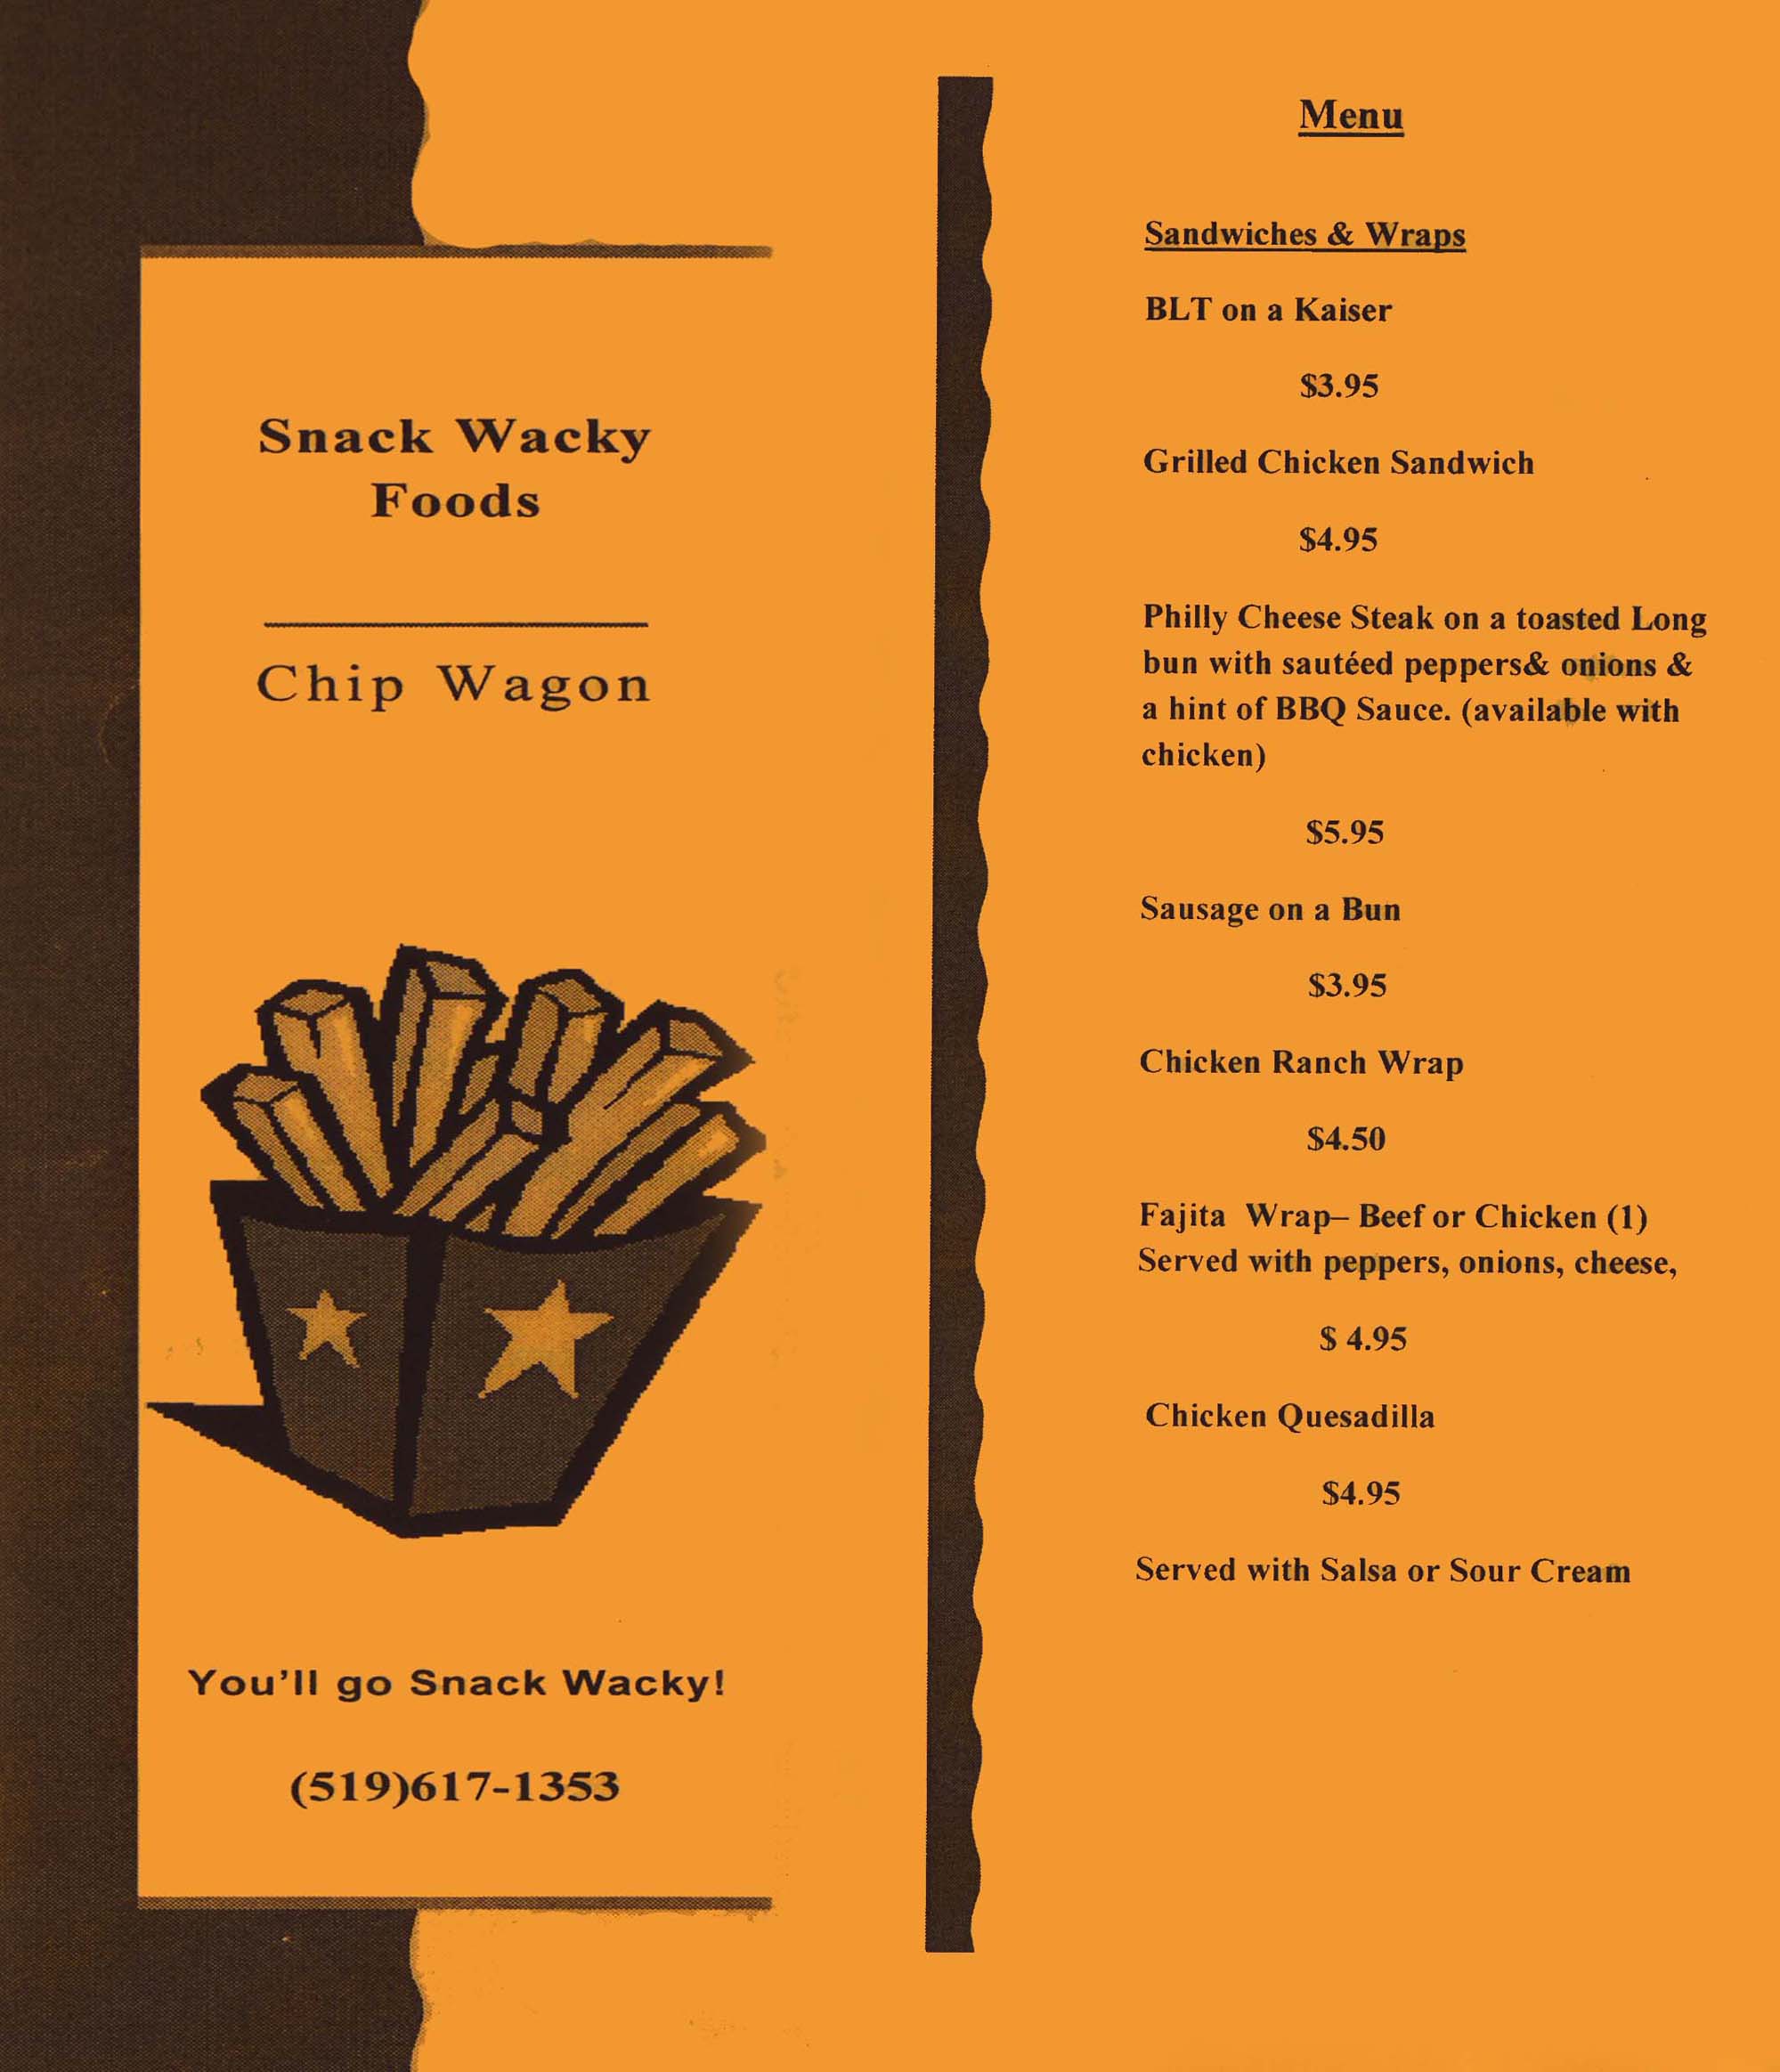 Chip Wagon Menu - Page 1!